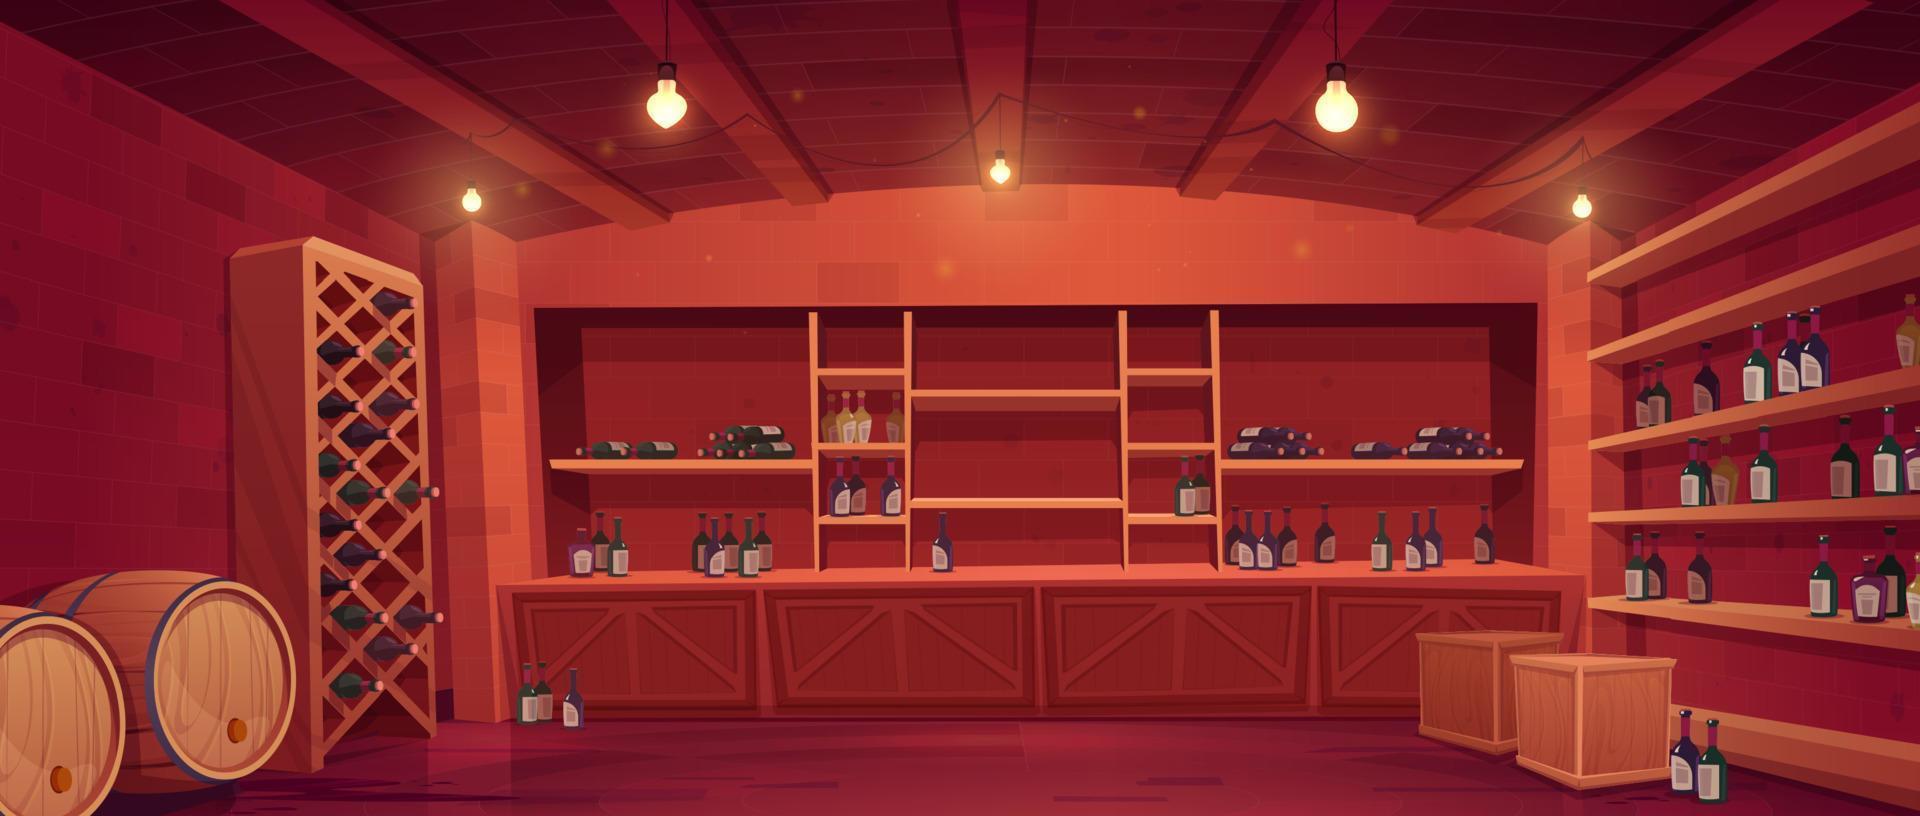 Wine shop, cellar interior with bottles on shelves vector